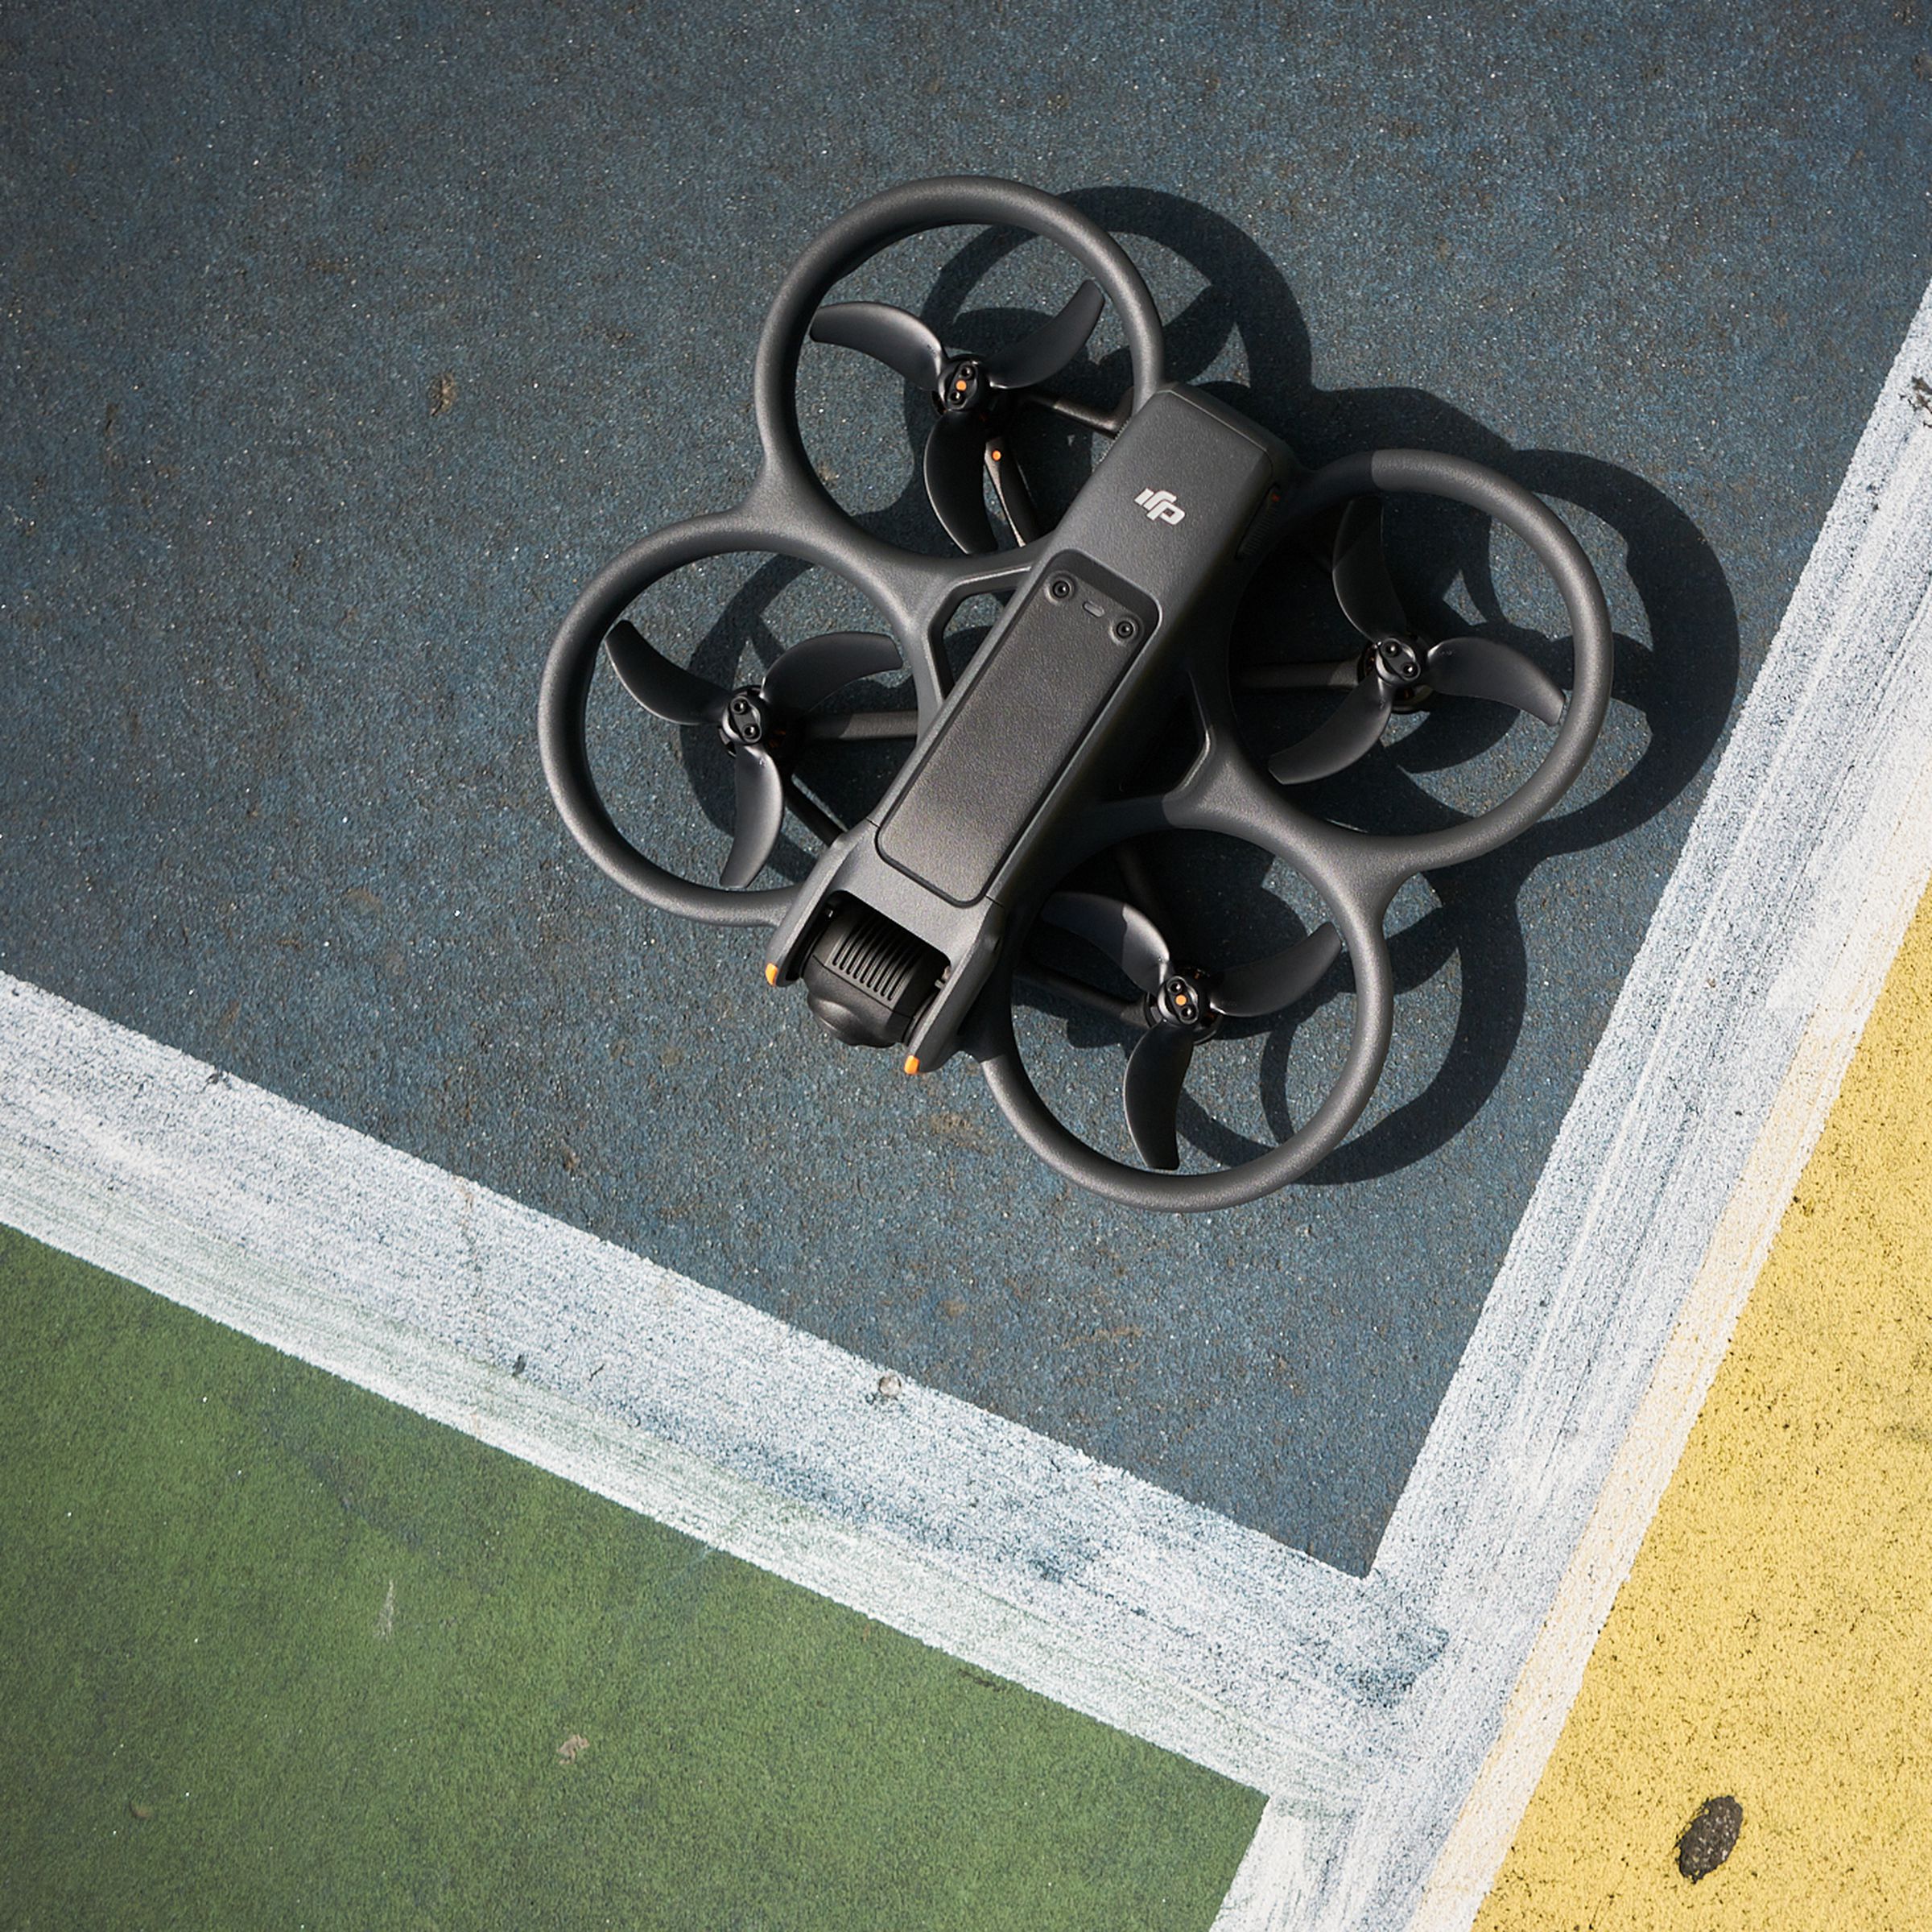 A photo showing DJI’s Avata 2 drone on pavement.